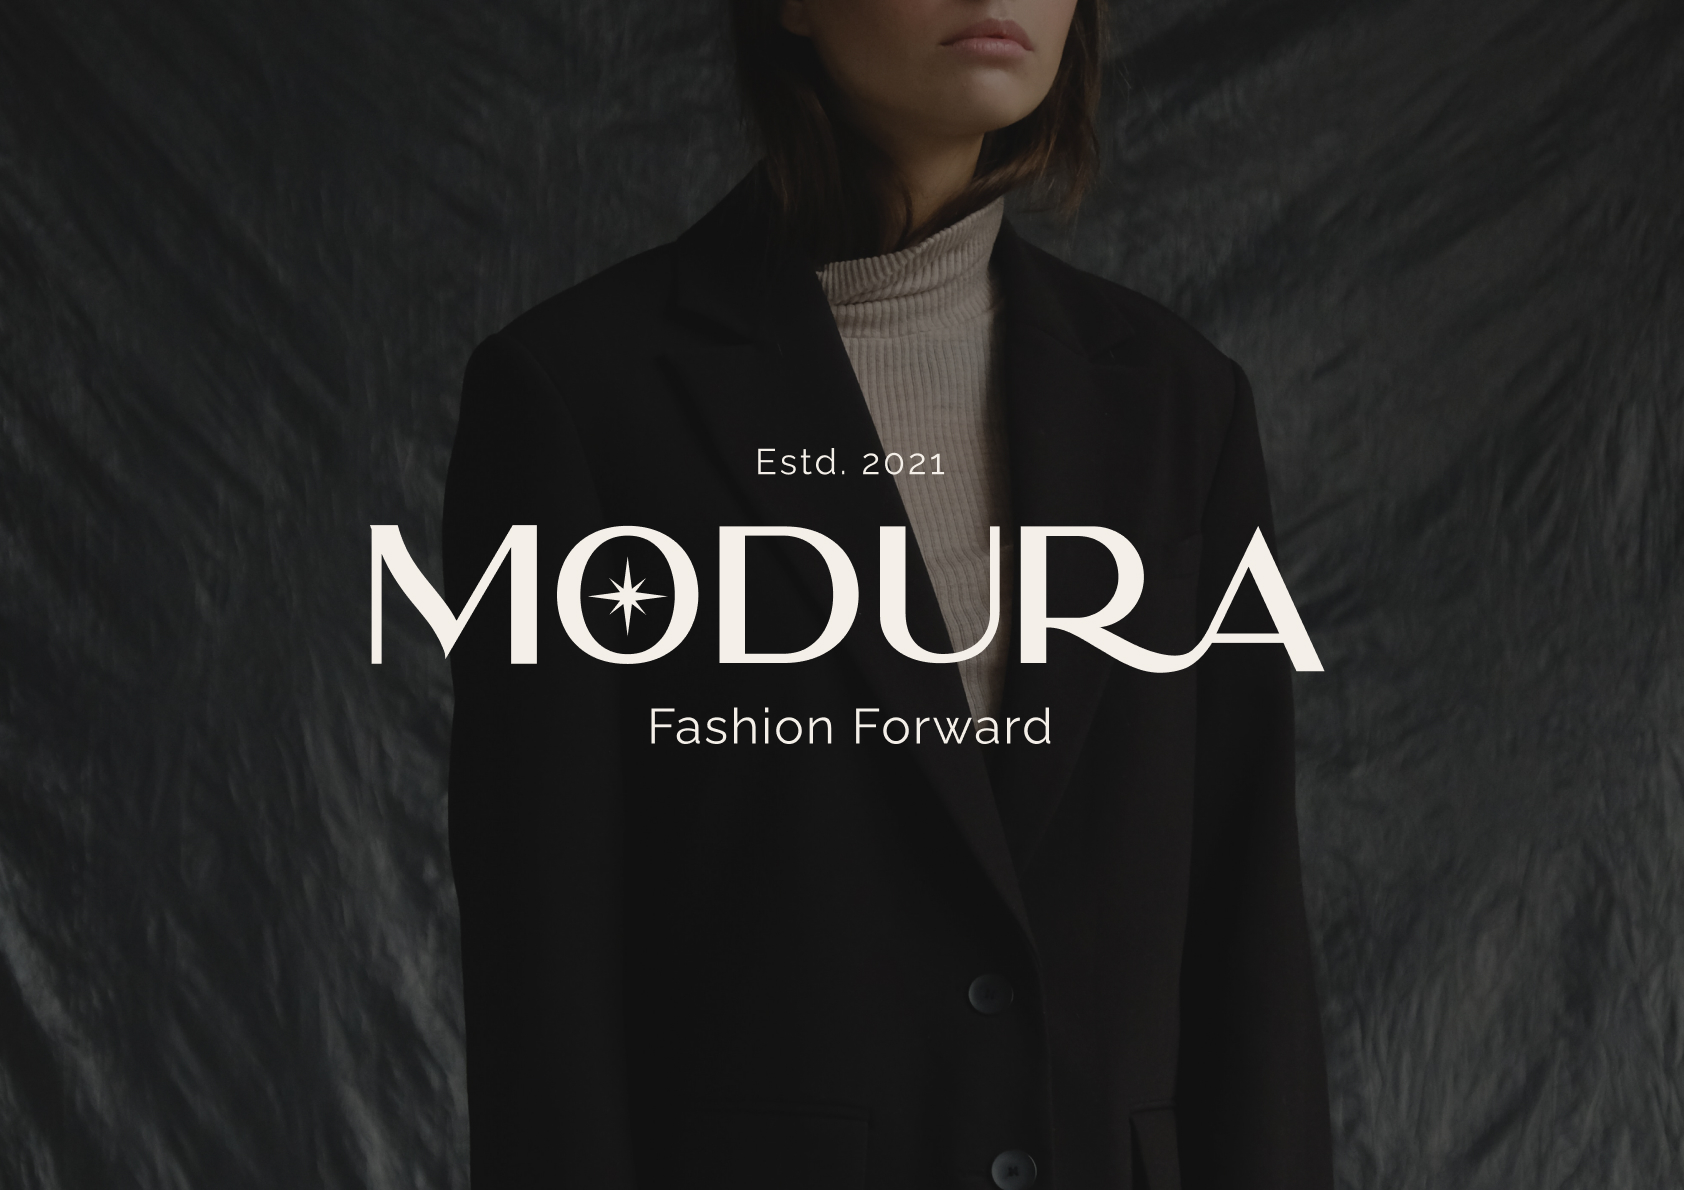 Maanasa’s Brand Identity Design for Modura